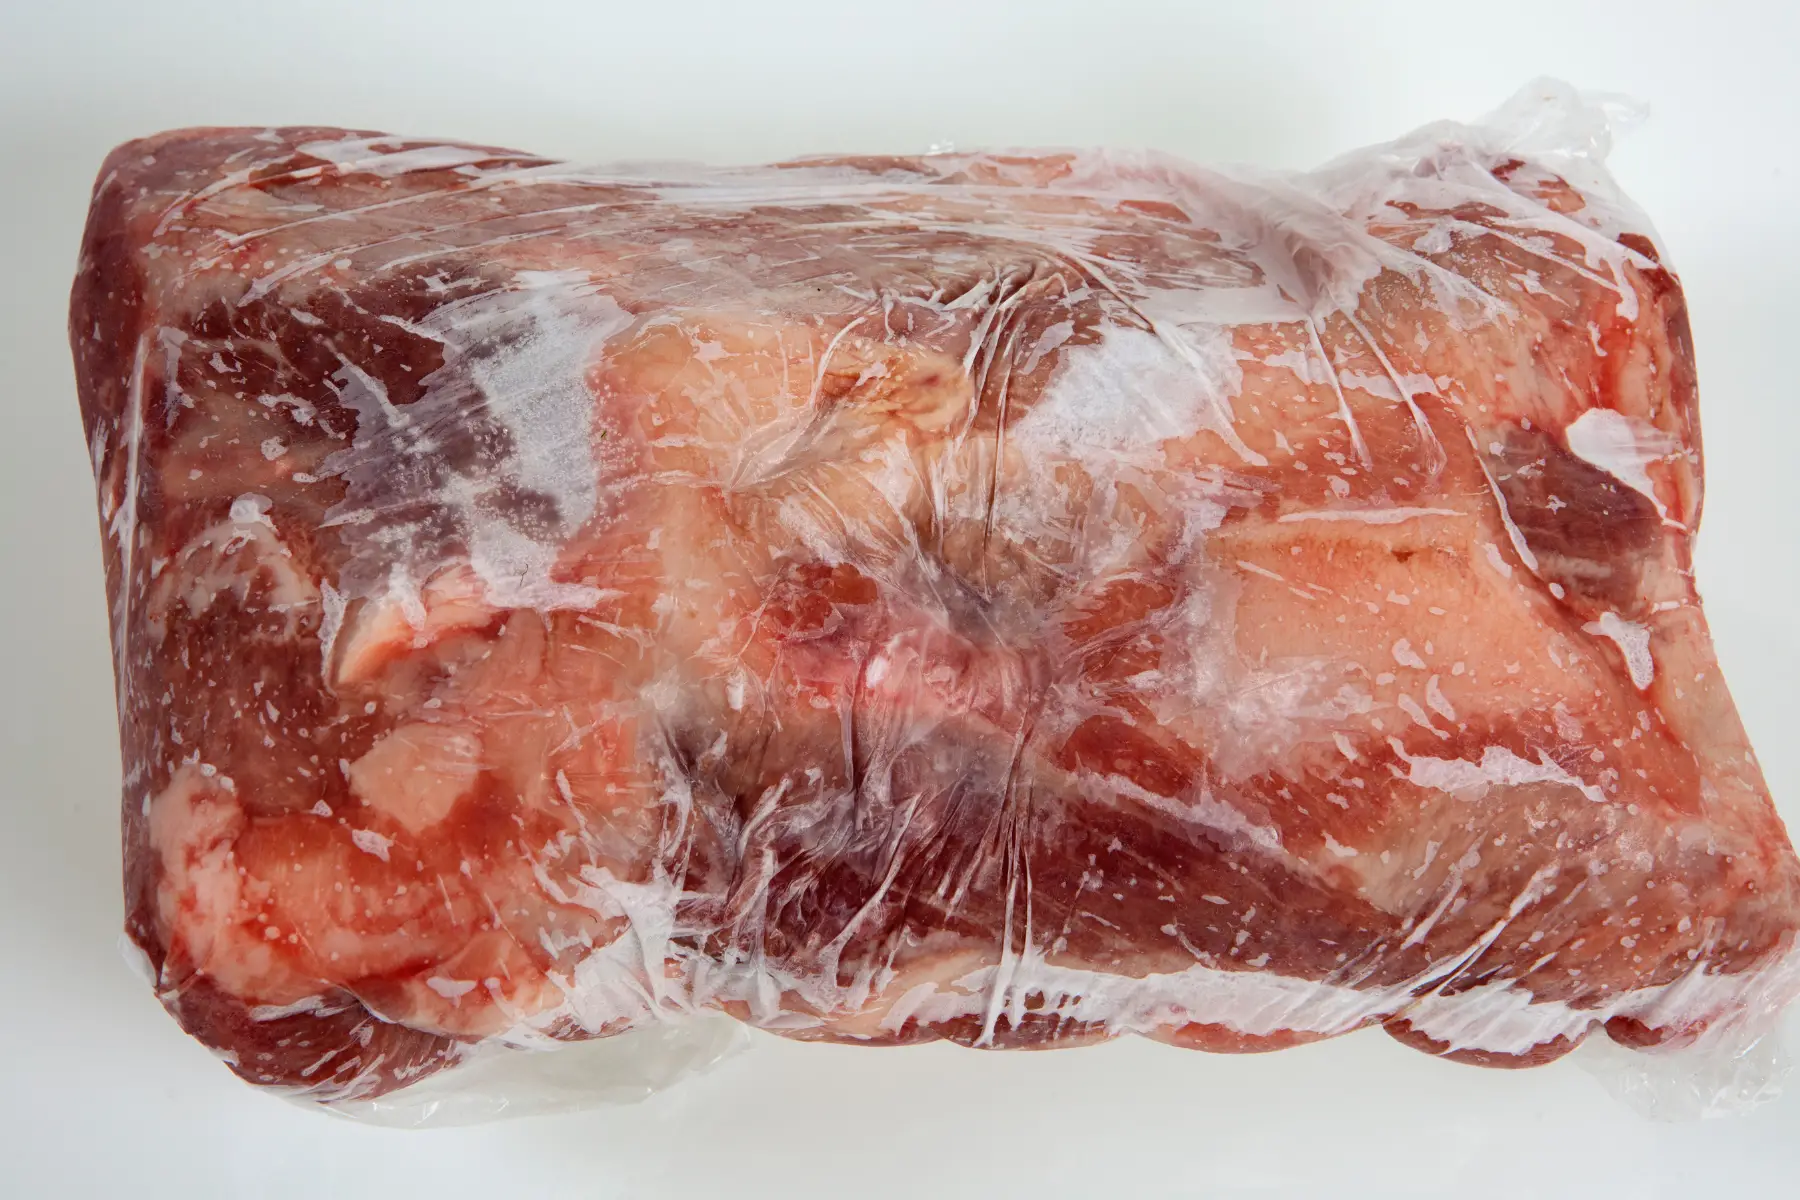 how to cook frozen pork chops